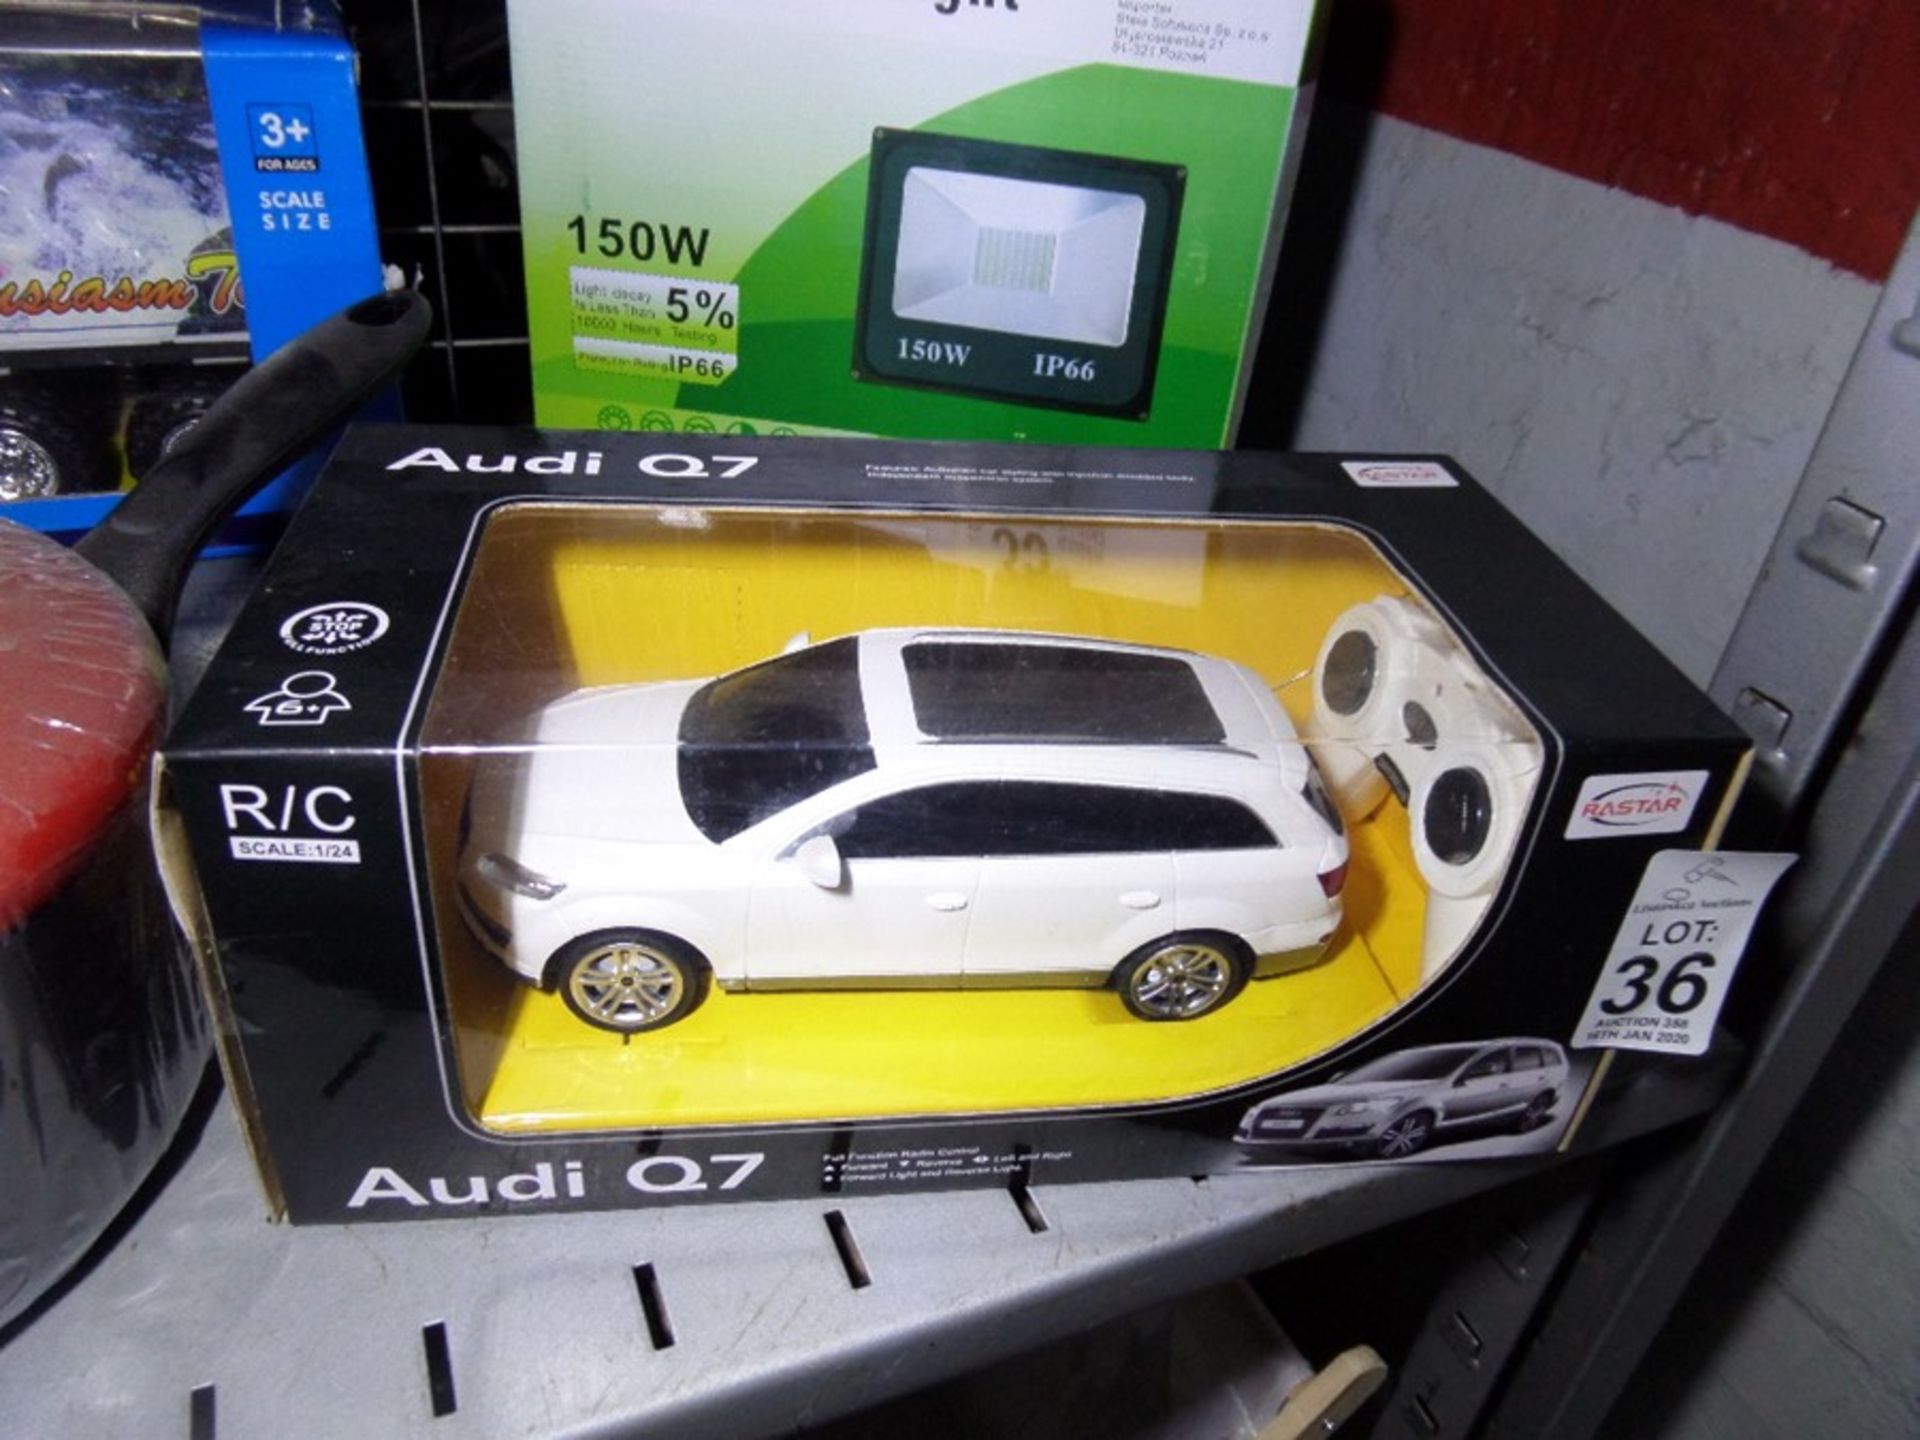 BOXED AUDI Q7 REMOTE MODEL CAR SHOP CLEARANCE